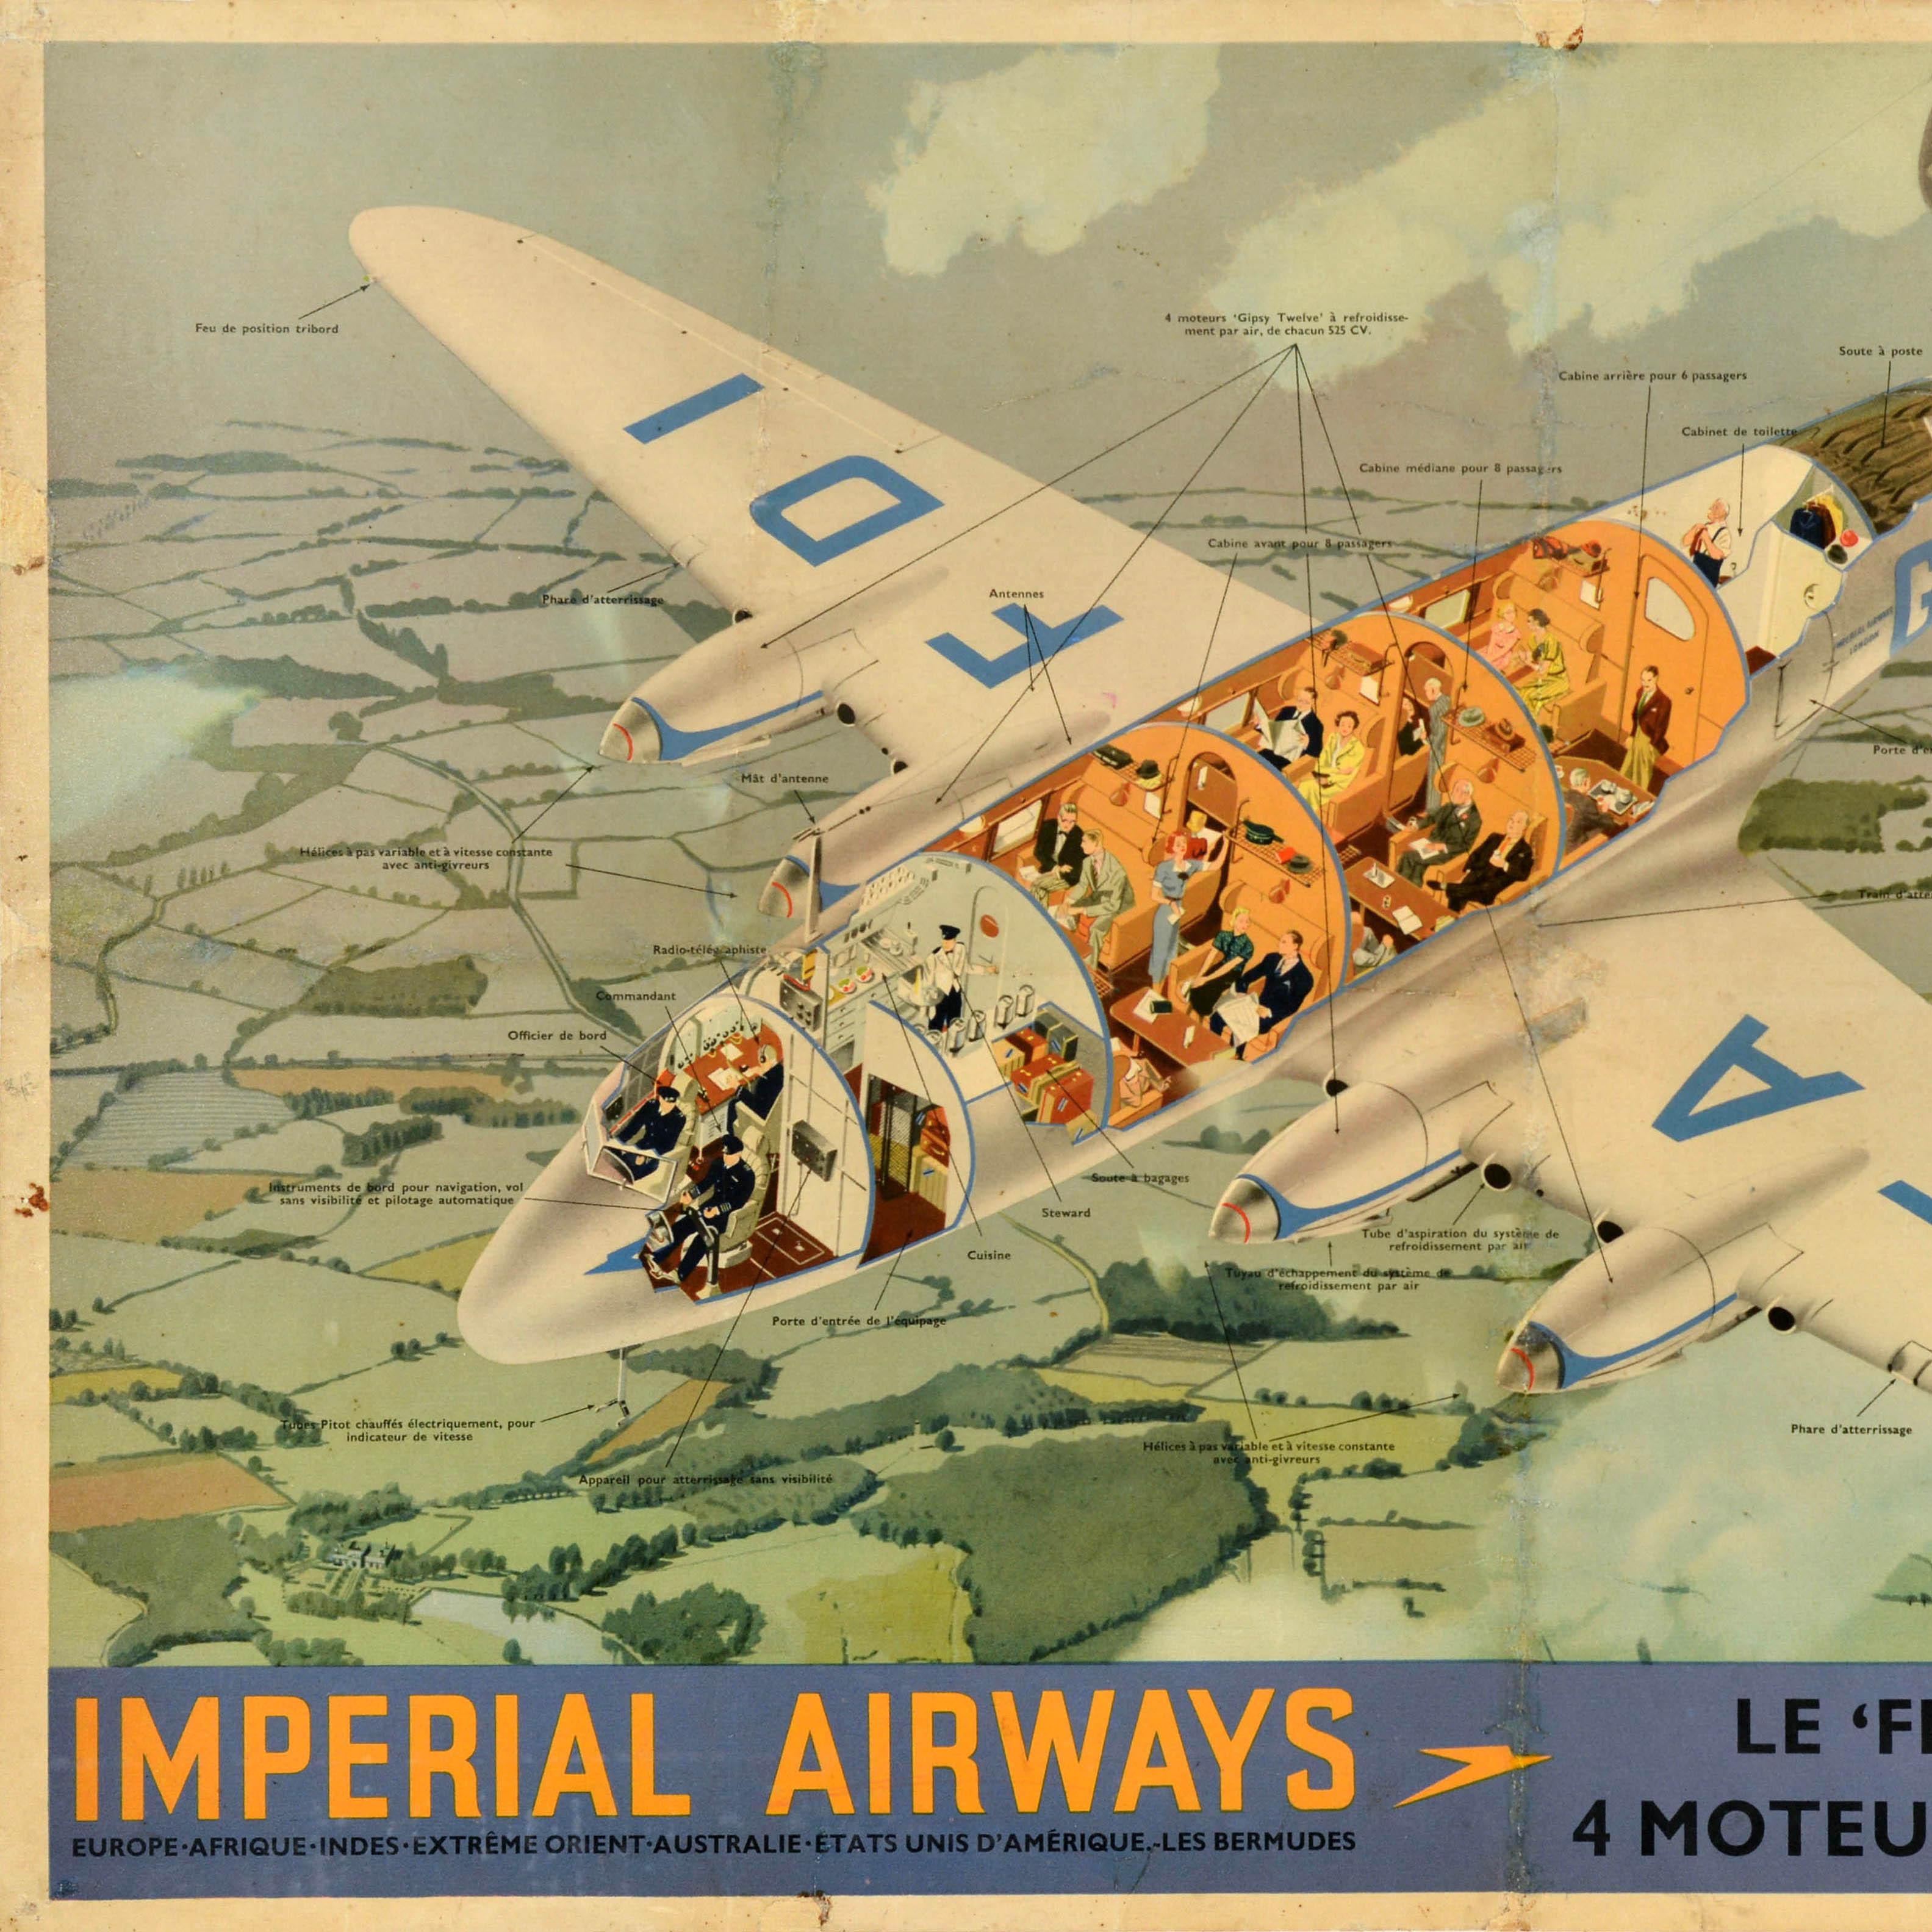 British Original Vintage Travel Advertising Poster Imperial Airways Le Frobisher Design For Sale